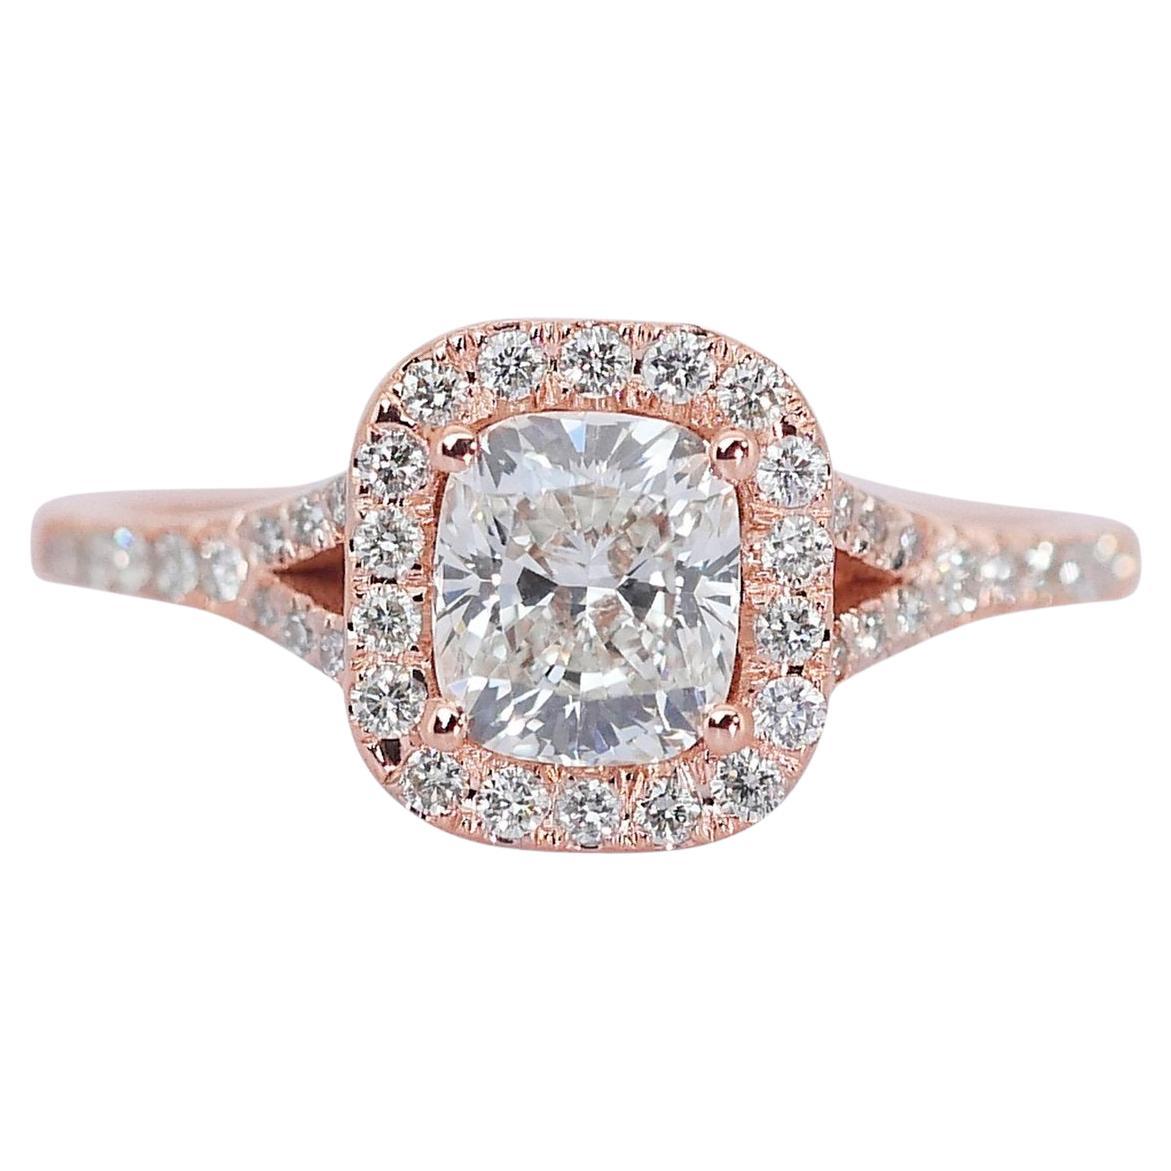 Elegant 1.28ct Diamond Halo Ring in 18k Rose Gold – GIA Certified For Sale